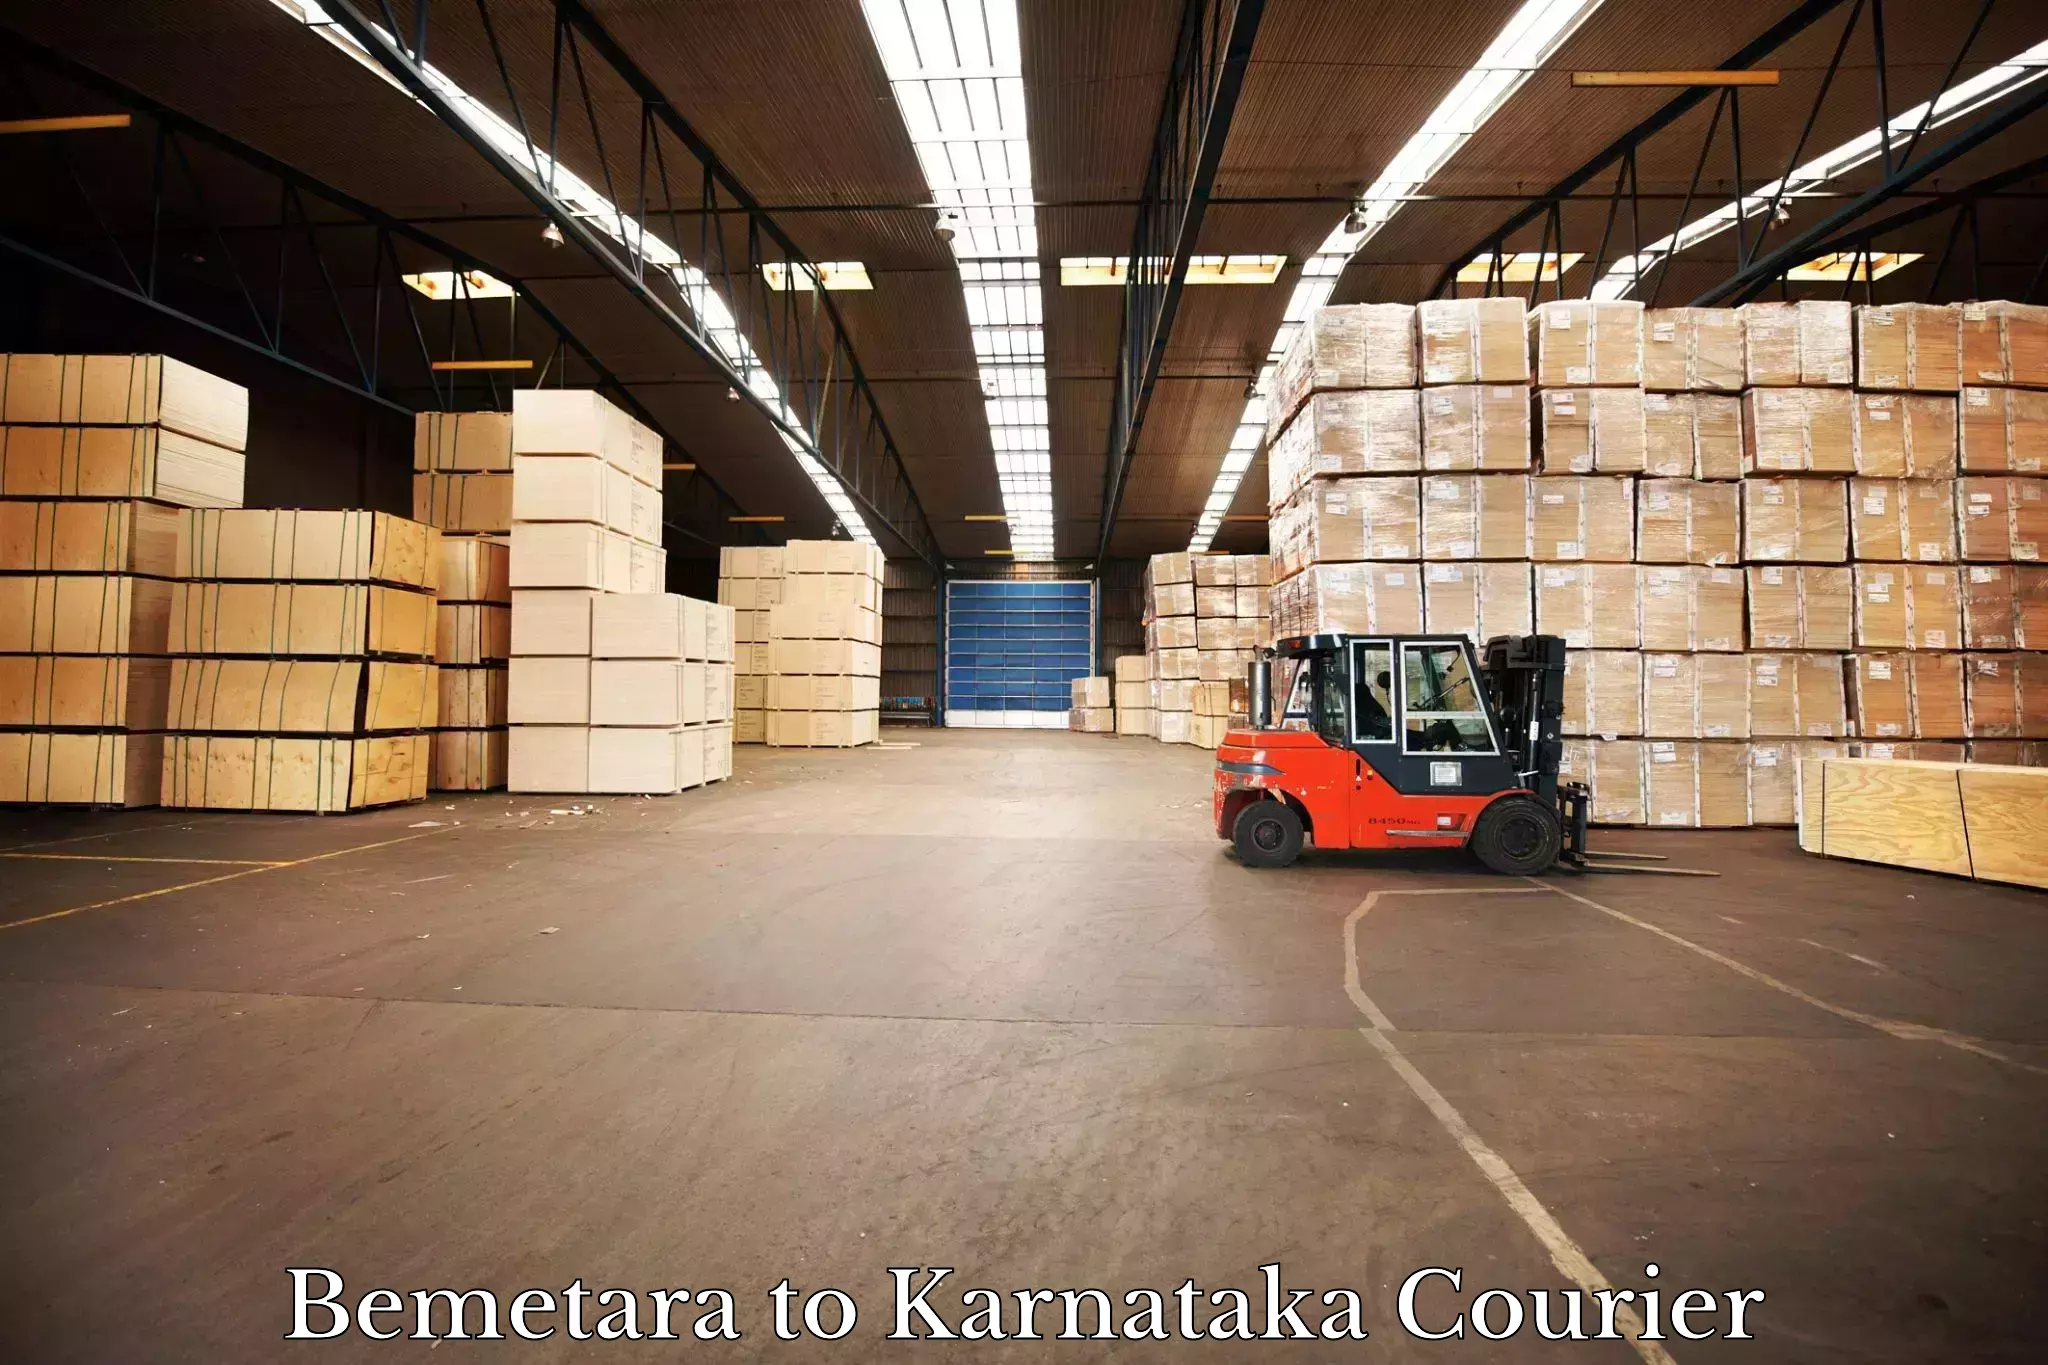 Courier service comparison Bemetara to Karnataka